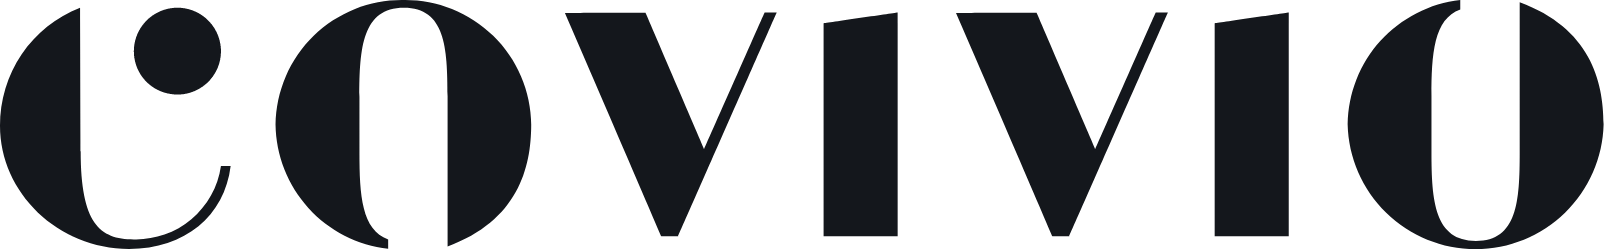 Covivio
 logo large (transparent PNG)